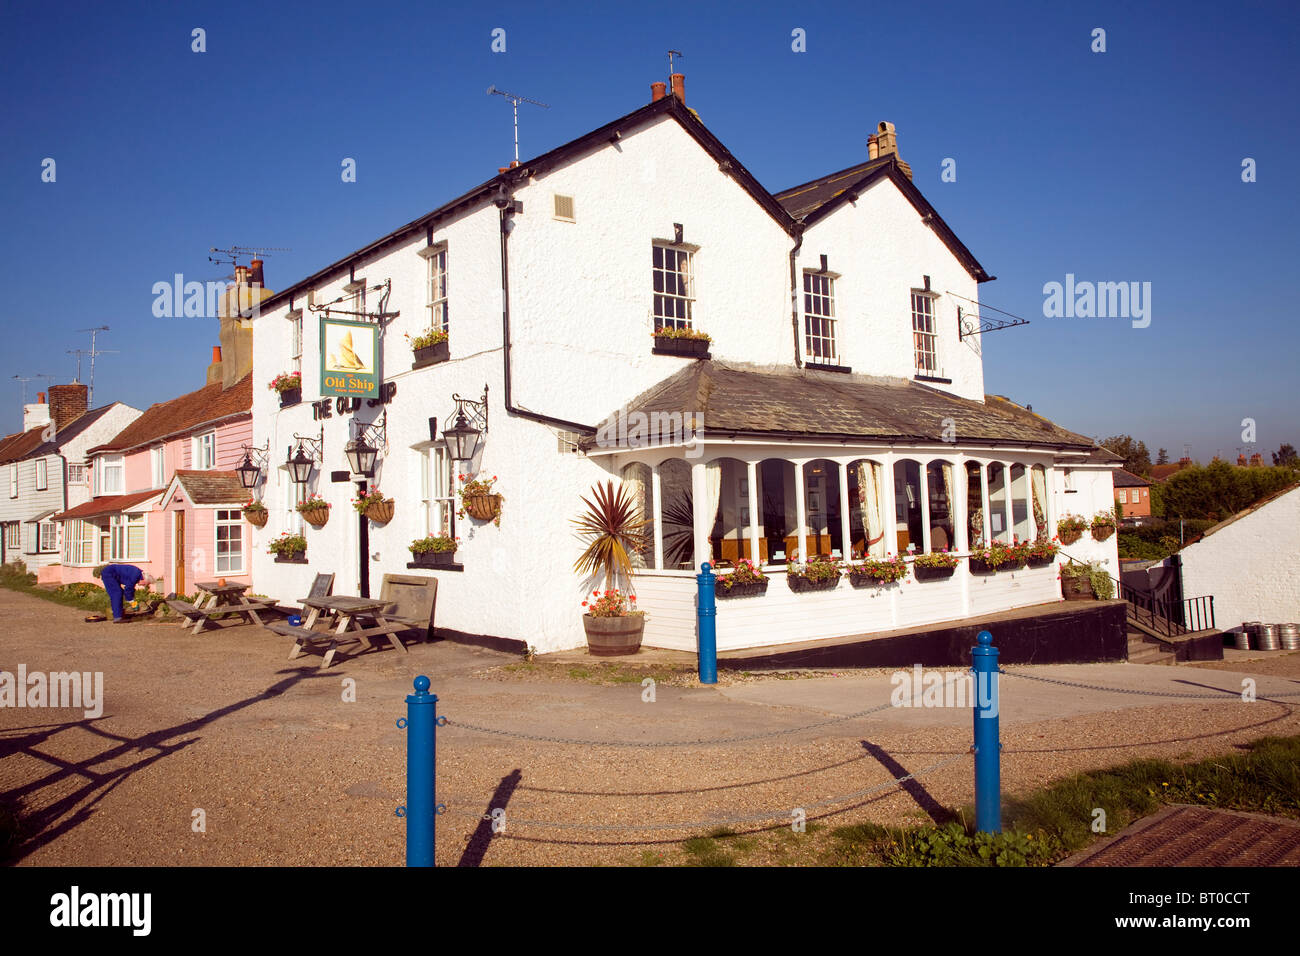 The Old Ship pub at Heybridge Basin, Maldon, Essex, England Stock Photo